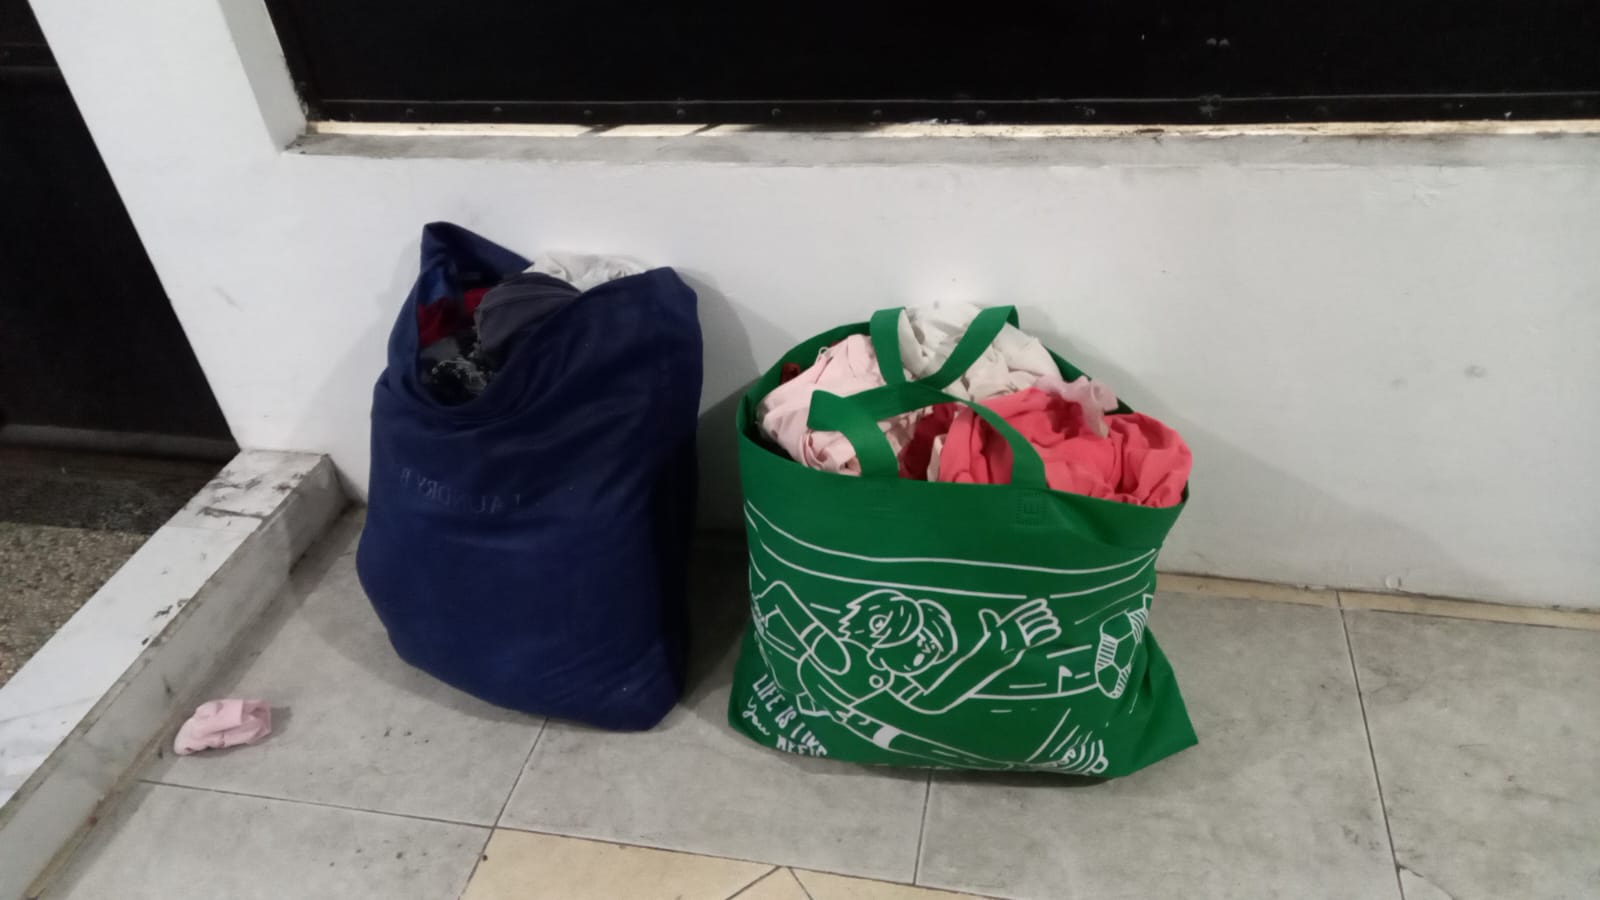 Jasa Laundry: Solusi Praktis untuk Menjaga Pakaian Tetap Bersih dan Tidak Repot